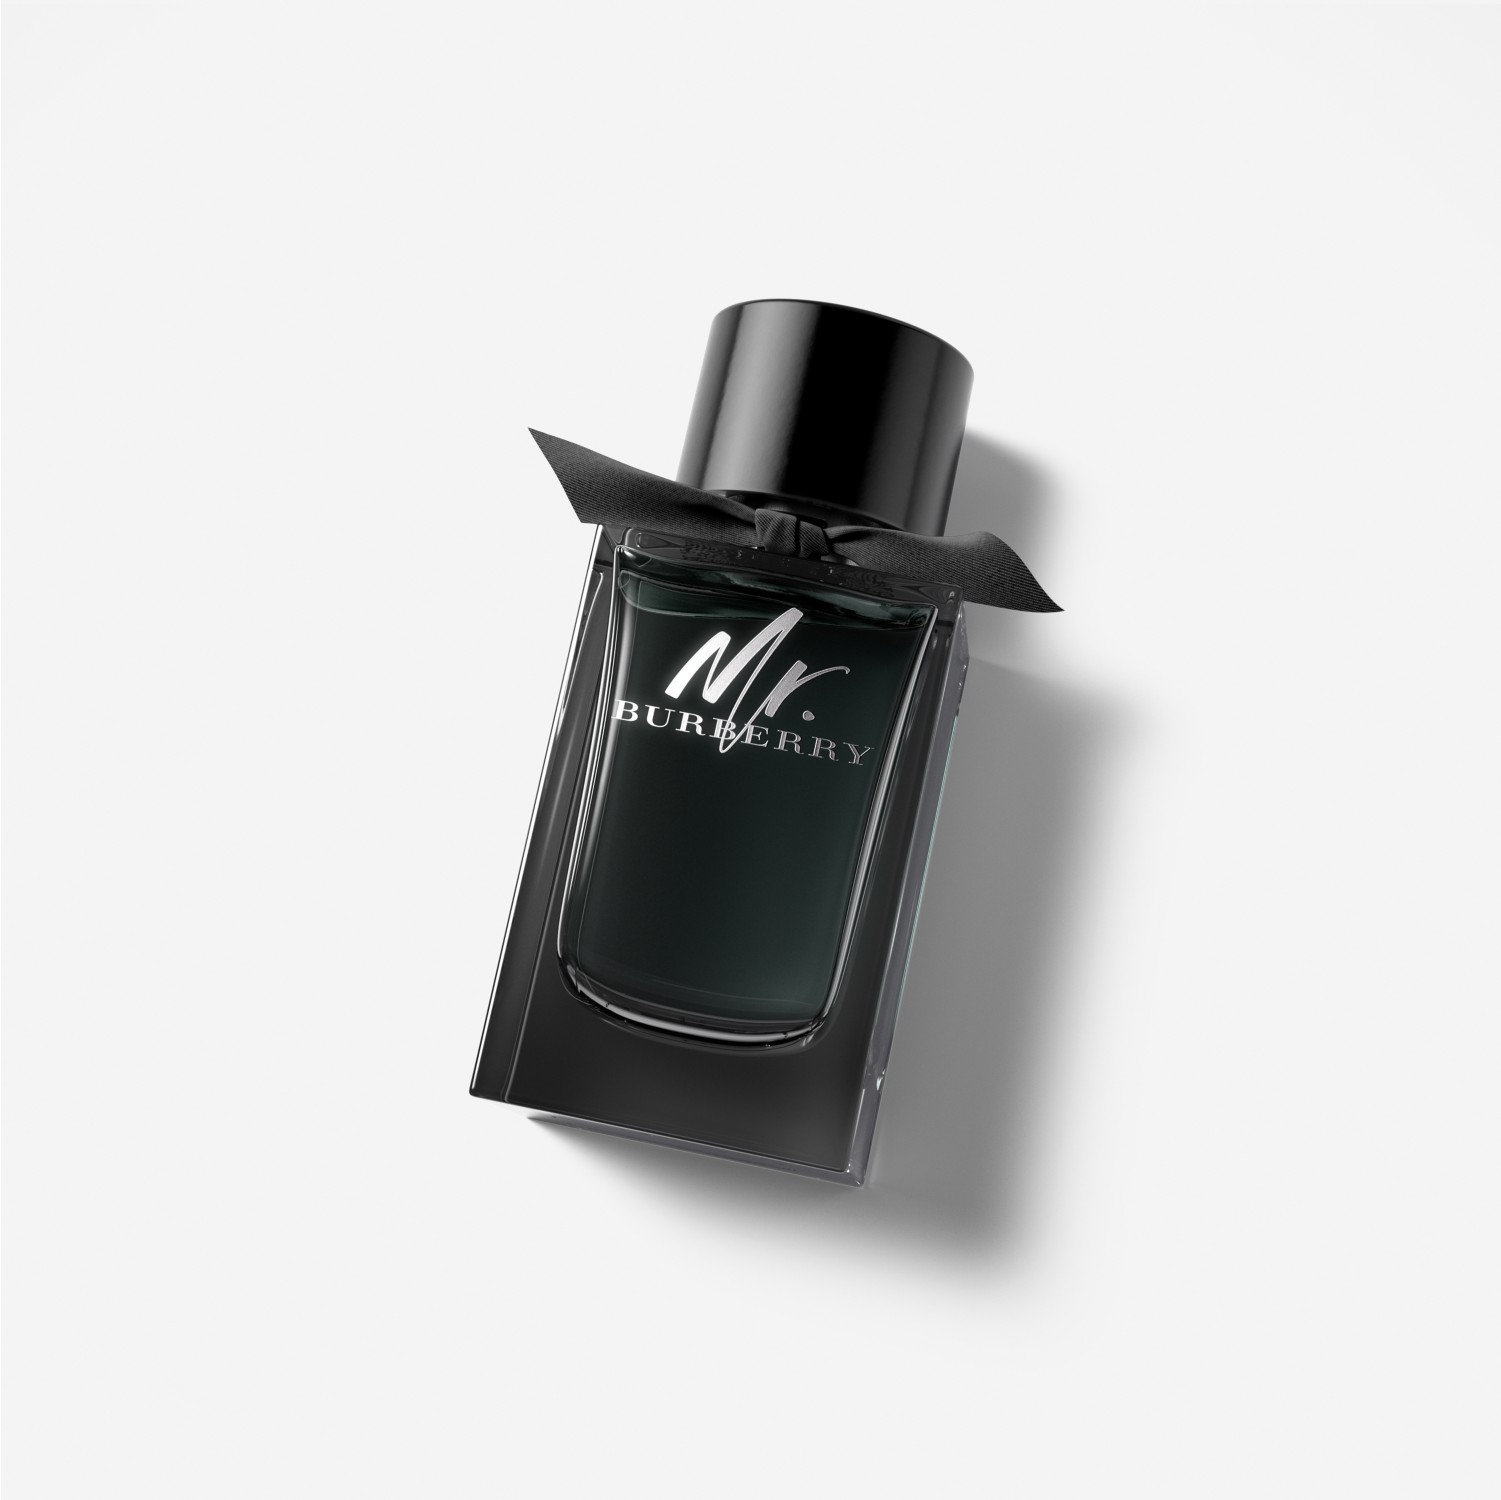 Mr. Burberry Eau de Parfum de 150 ml